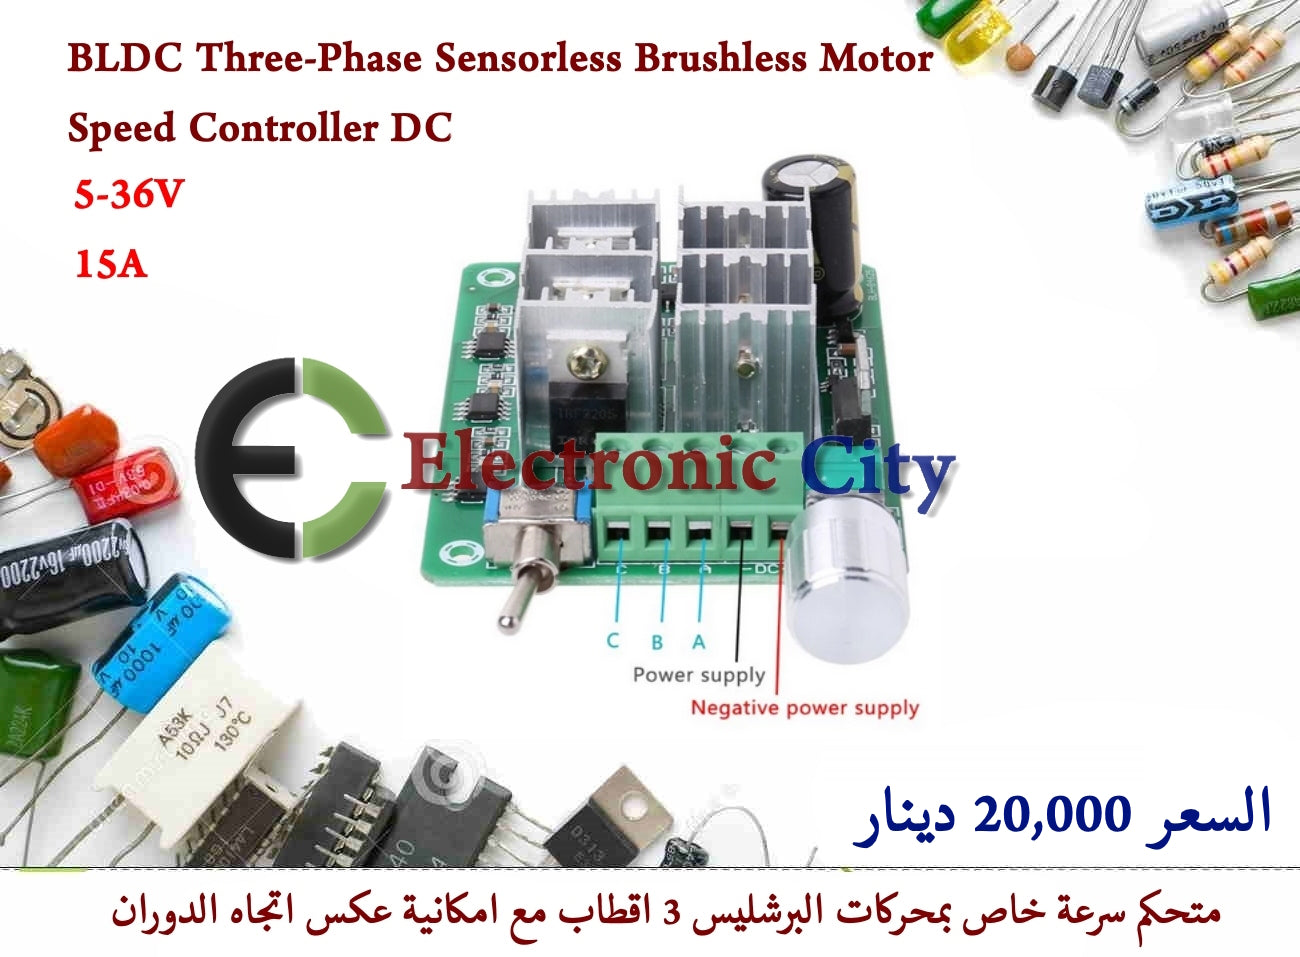 BLDC Three-Phase Sensorless Brushless Motor Speed Controller DC 5-36V 15A #R1 X13804